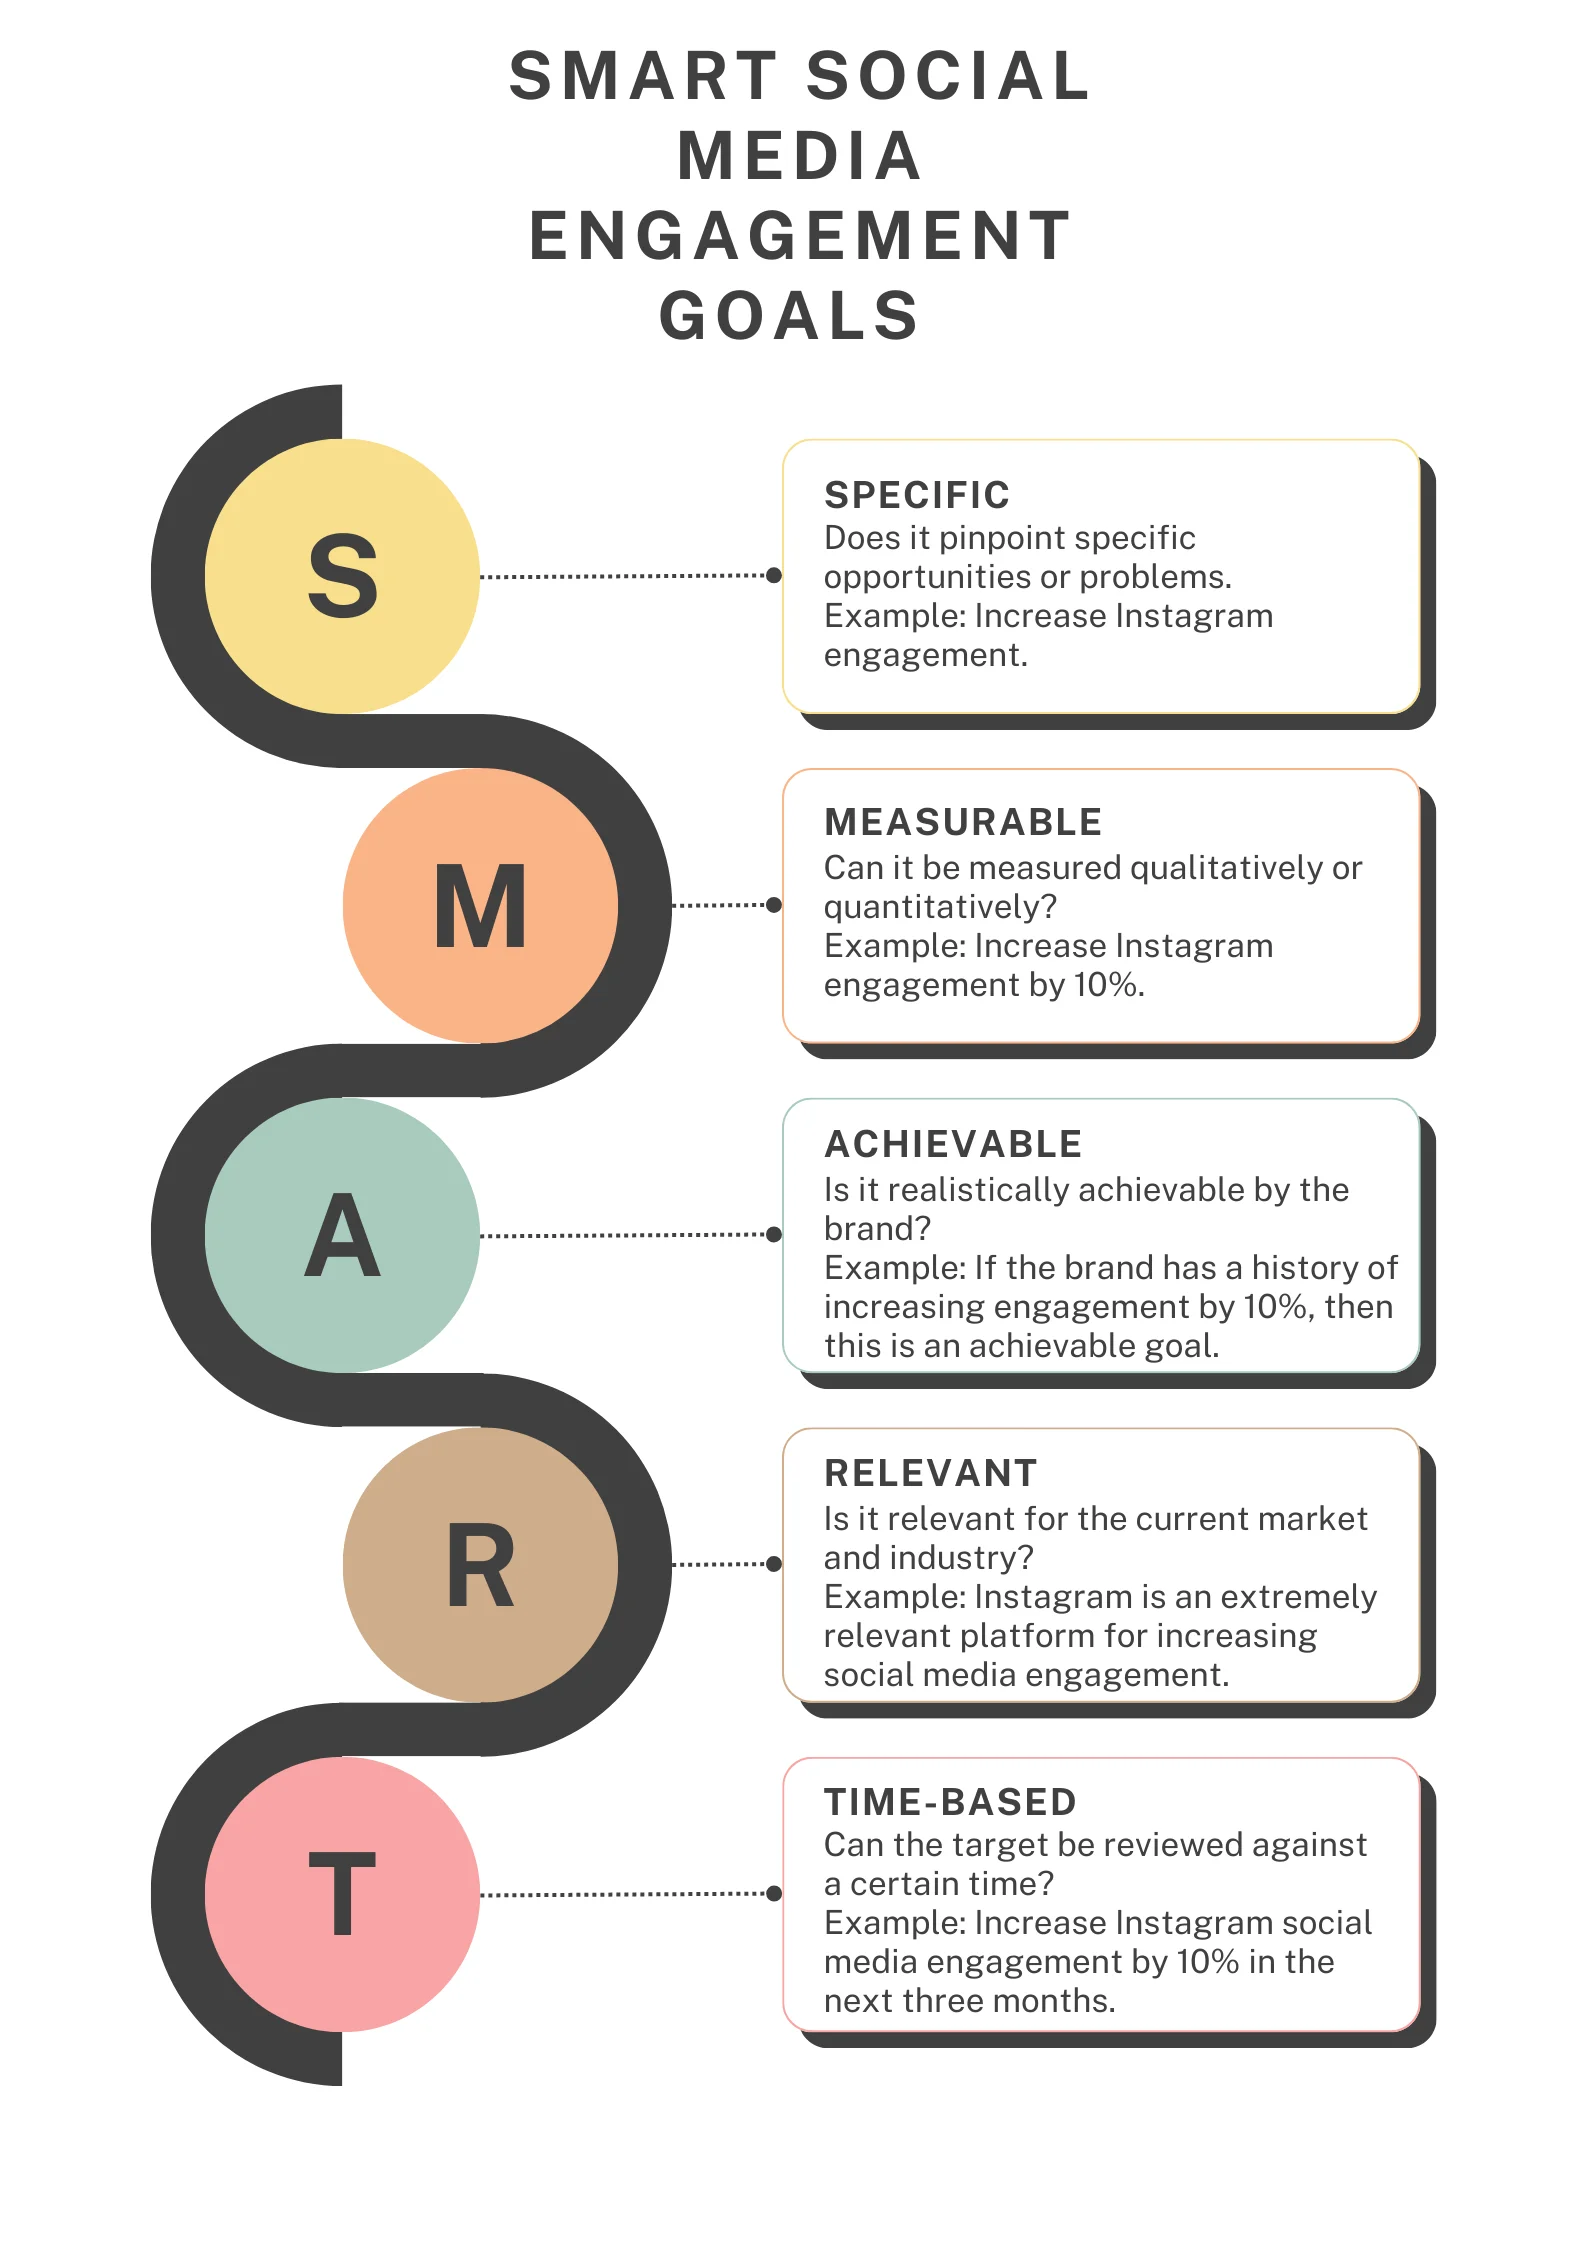 An infographic explaining smart social media engagement goals